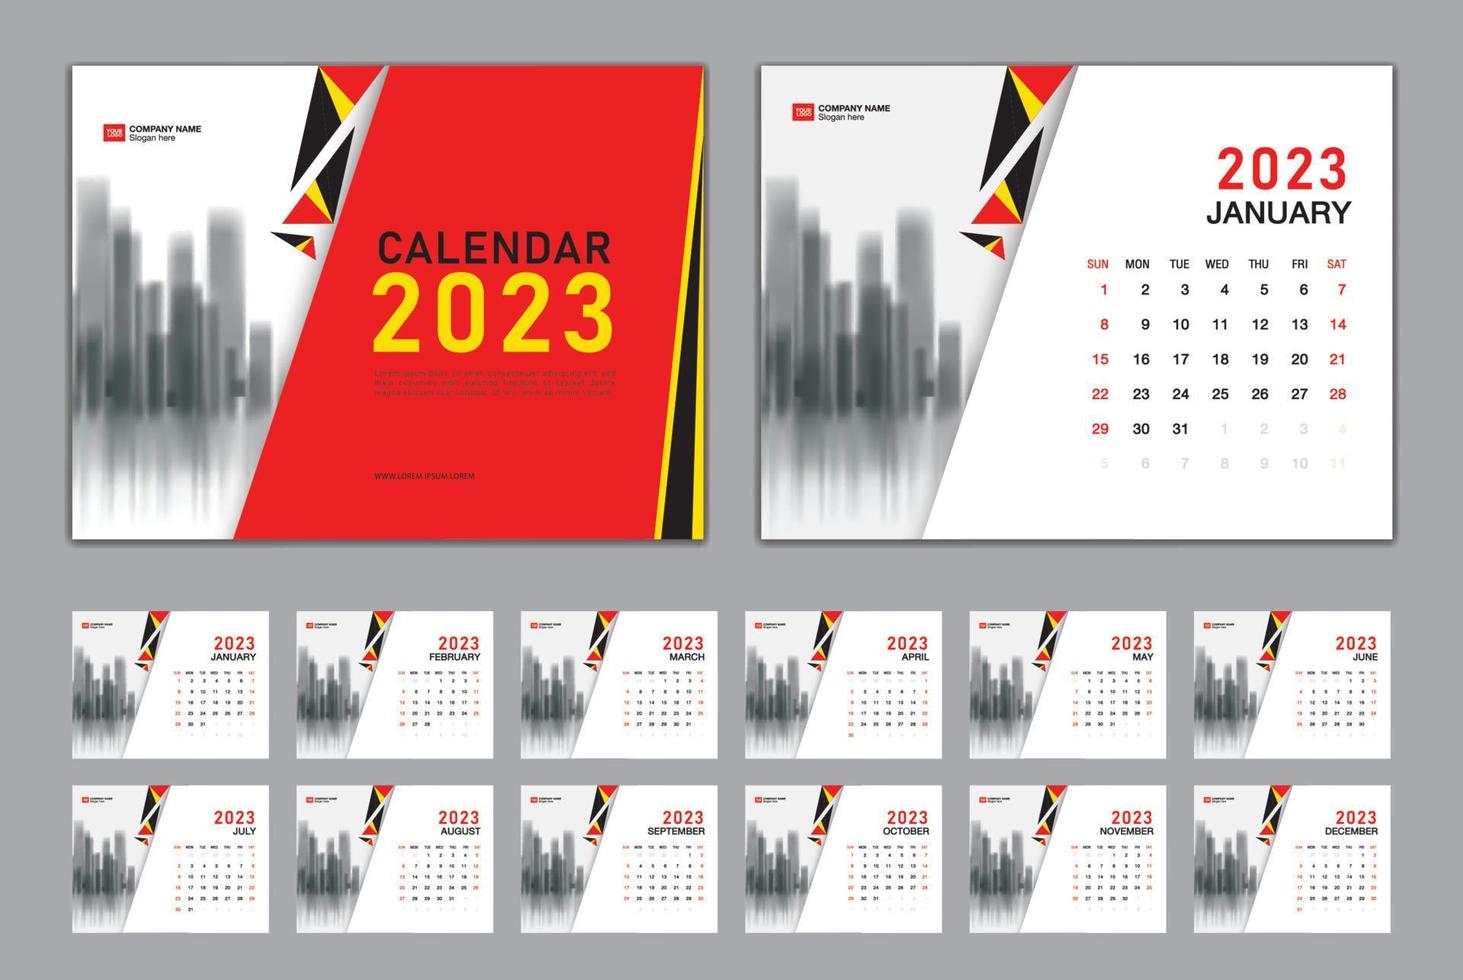 Calendar 2023 template set vector, Week starts Sunday, set of 12 month, Desk calendar 2023 year, wall calendar 2023 layout, business template, Stationery design, printing media, red cover design vector